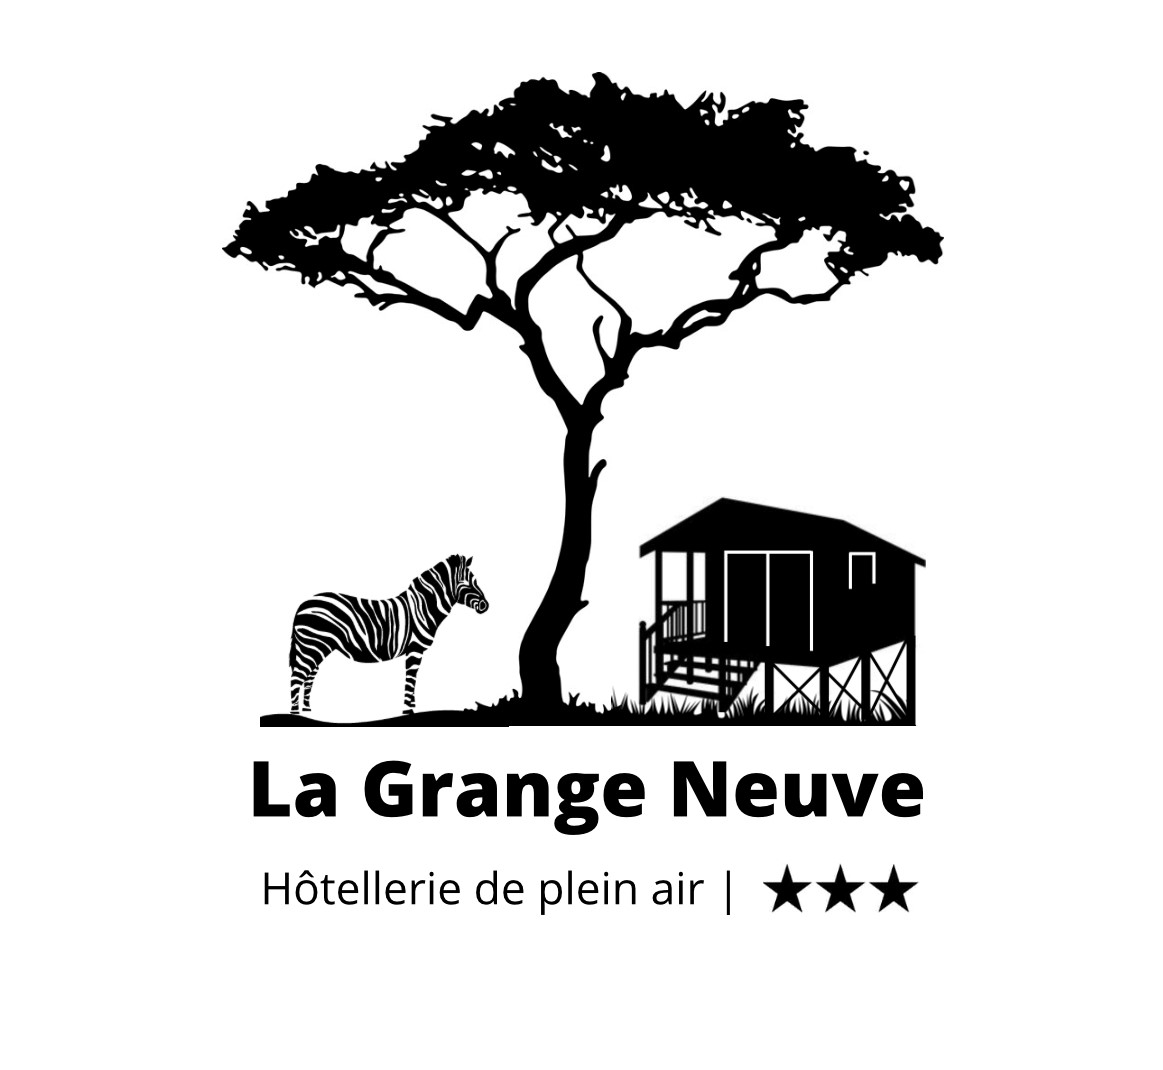 Établissement Camping La Grange Neuve - Sigean